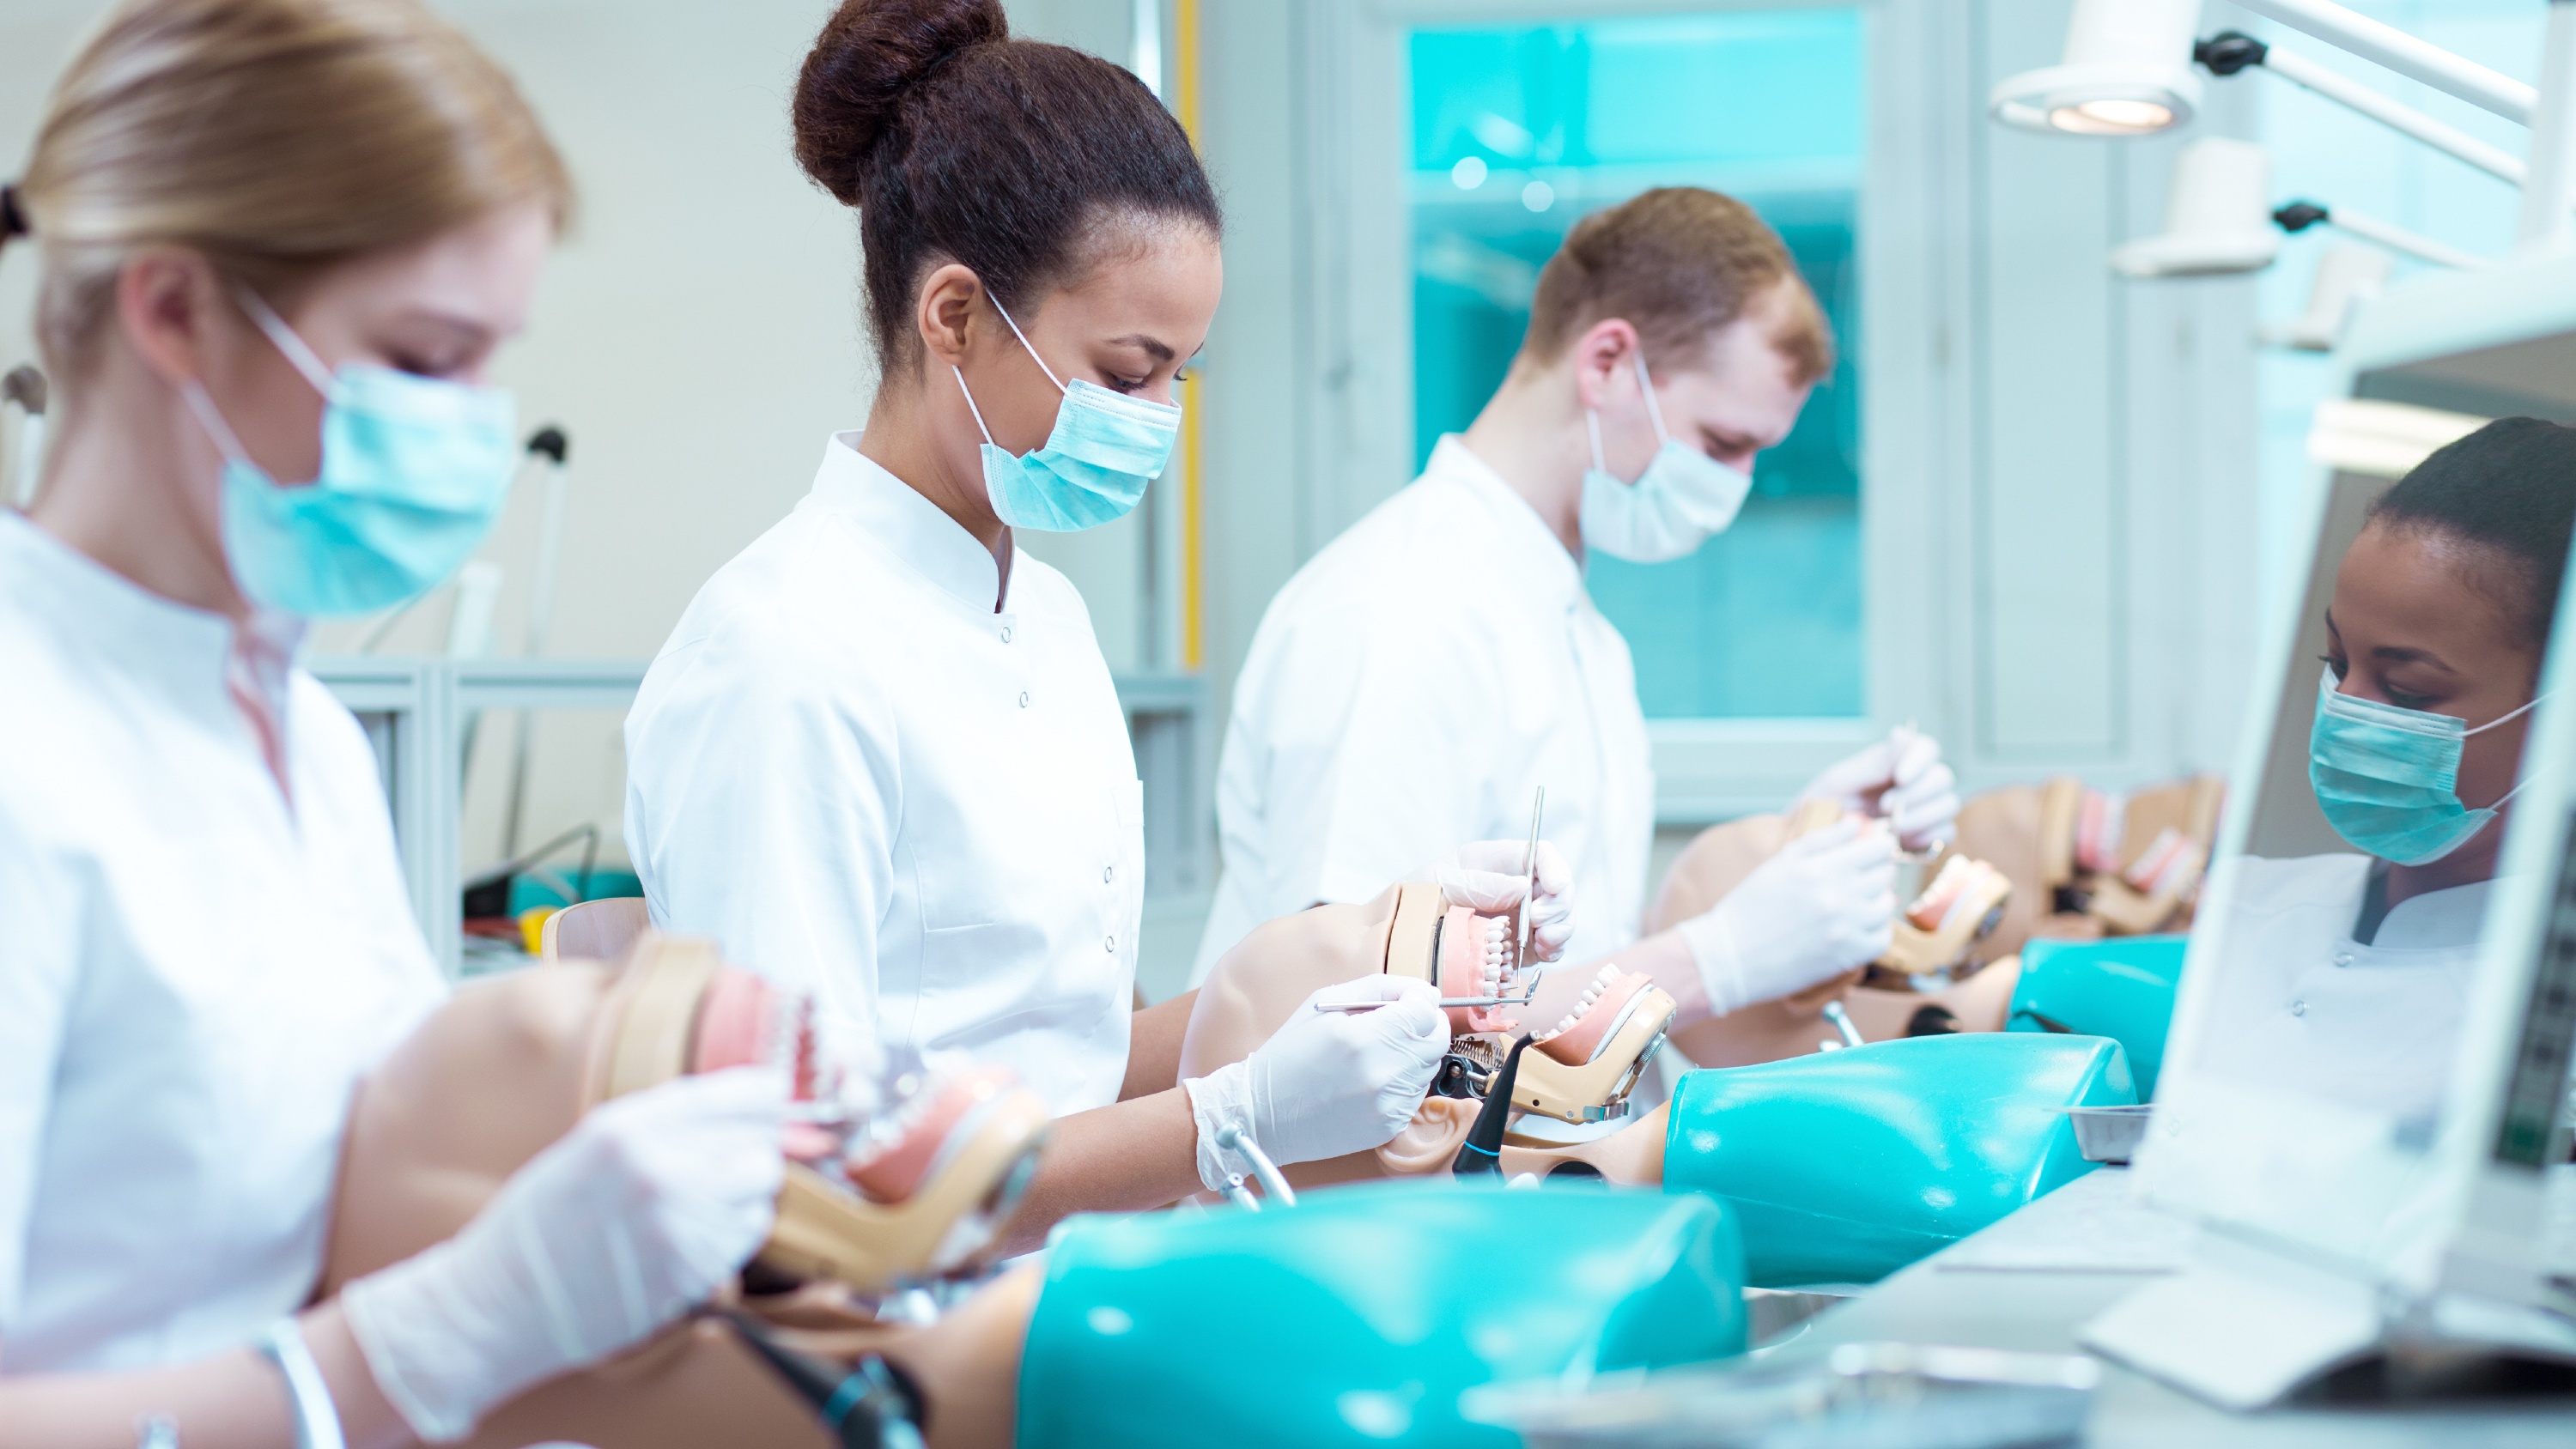 Dentistry apprentices work on dummies